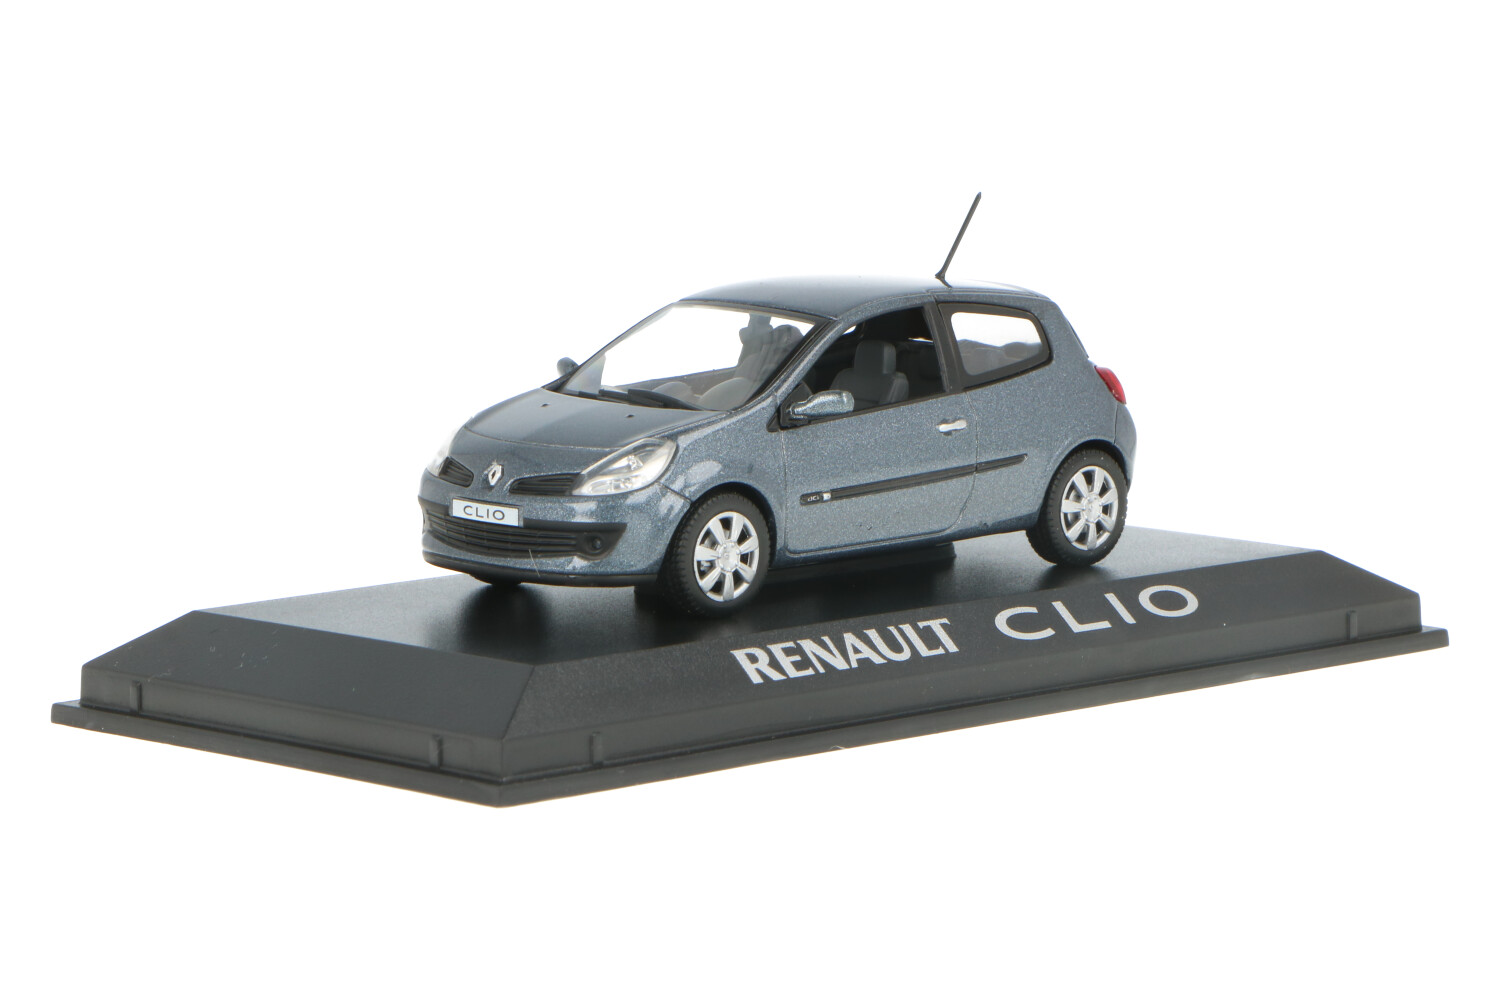 Renault-Clio-517532_13153551095175328Renault-Clio-517532_Houseofmodelcars_.jpg